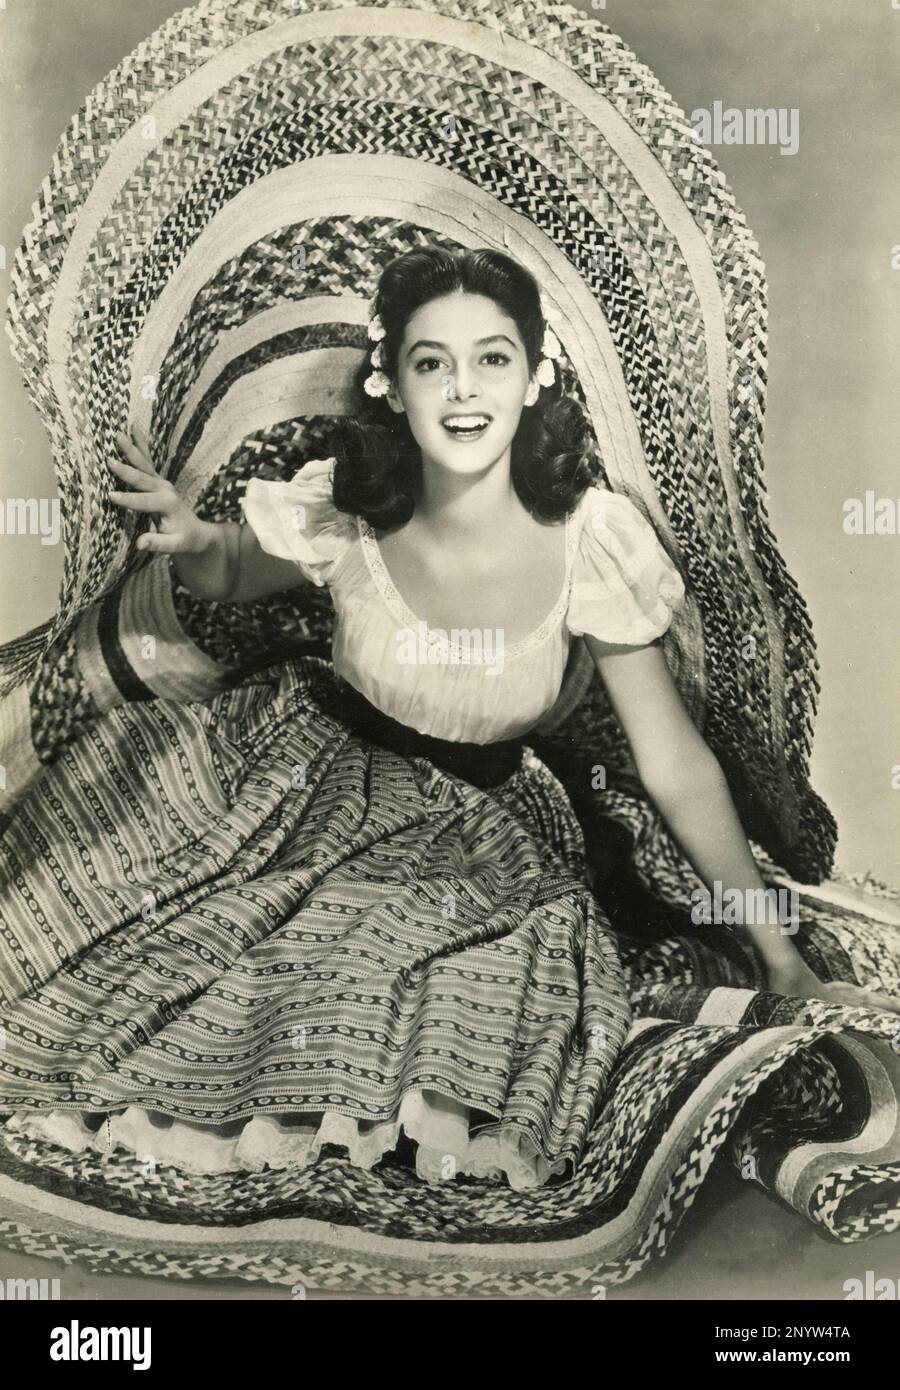 Attrice italiana Anna Maria Pier Angeli, 1950s Foto Stock